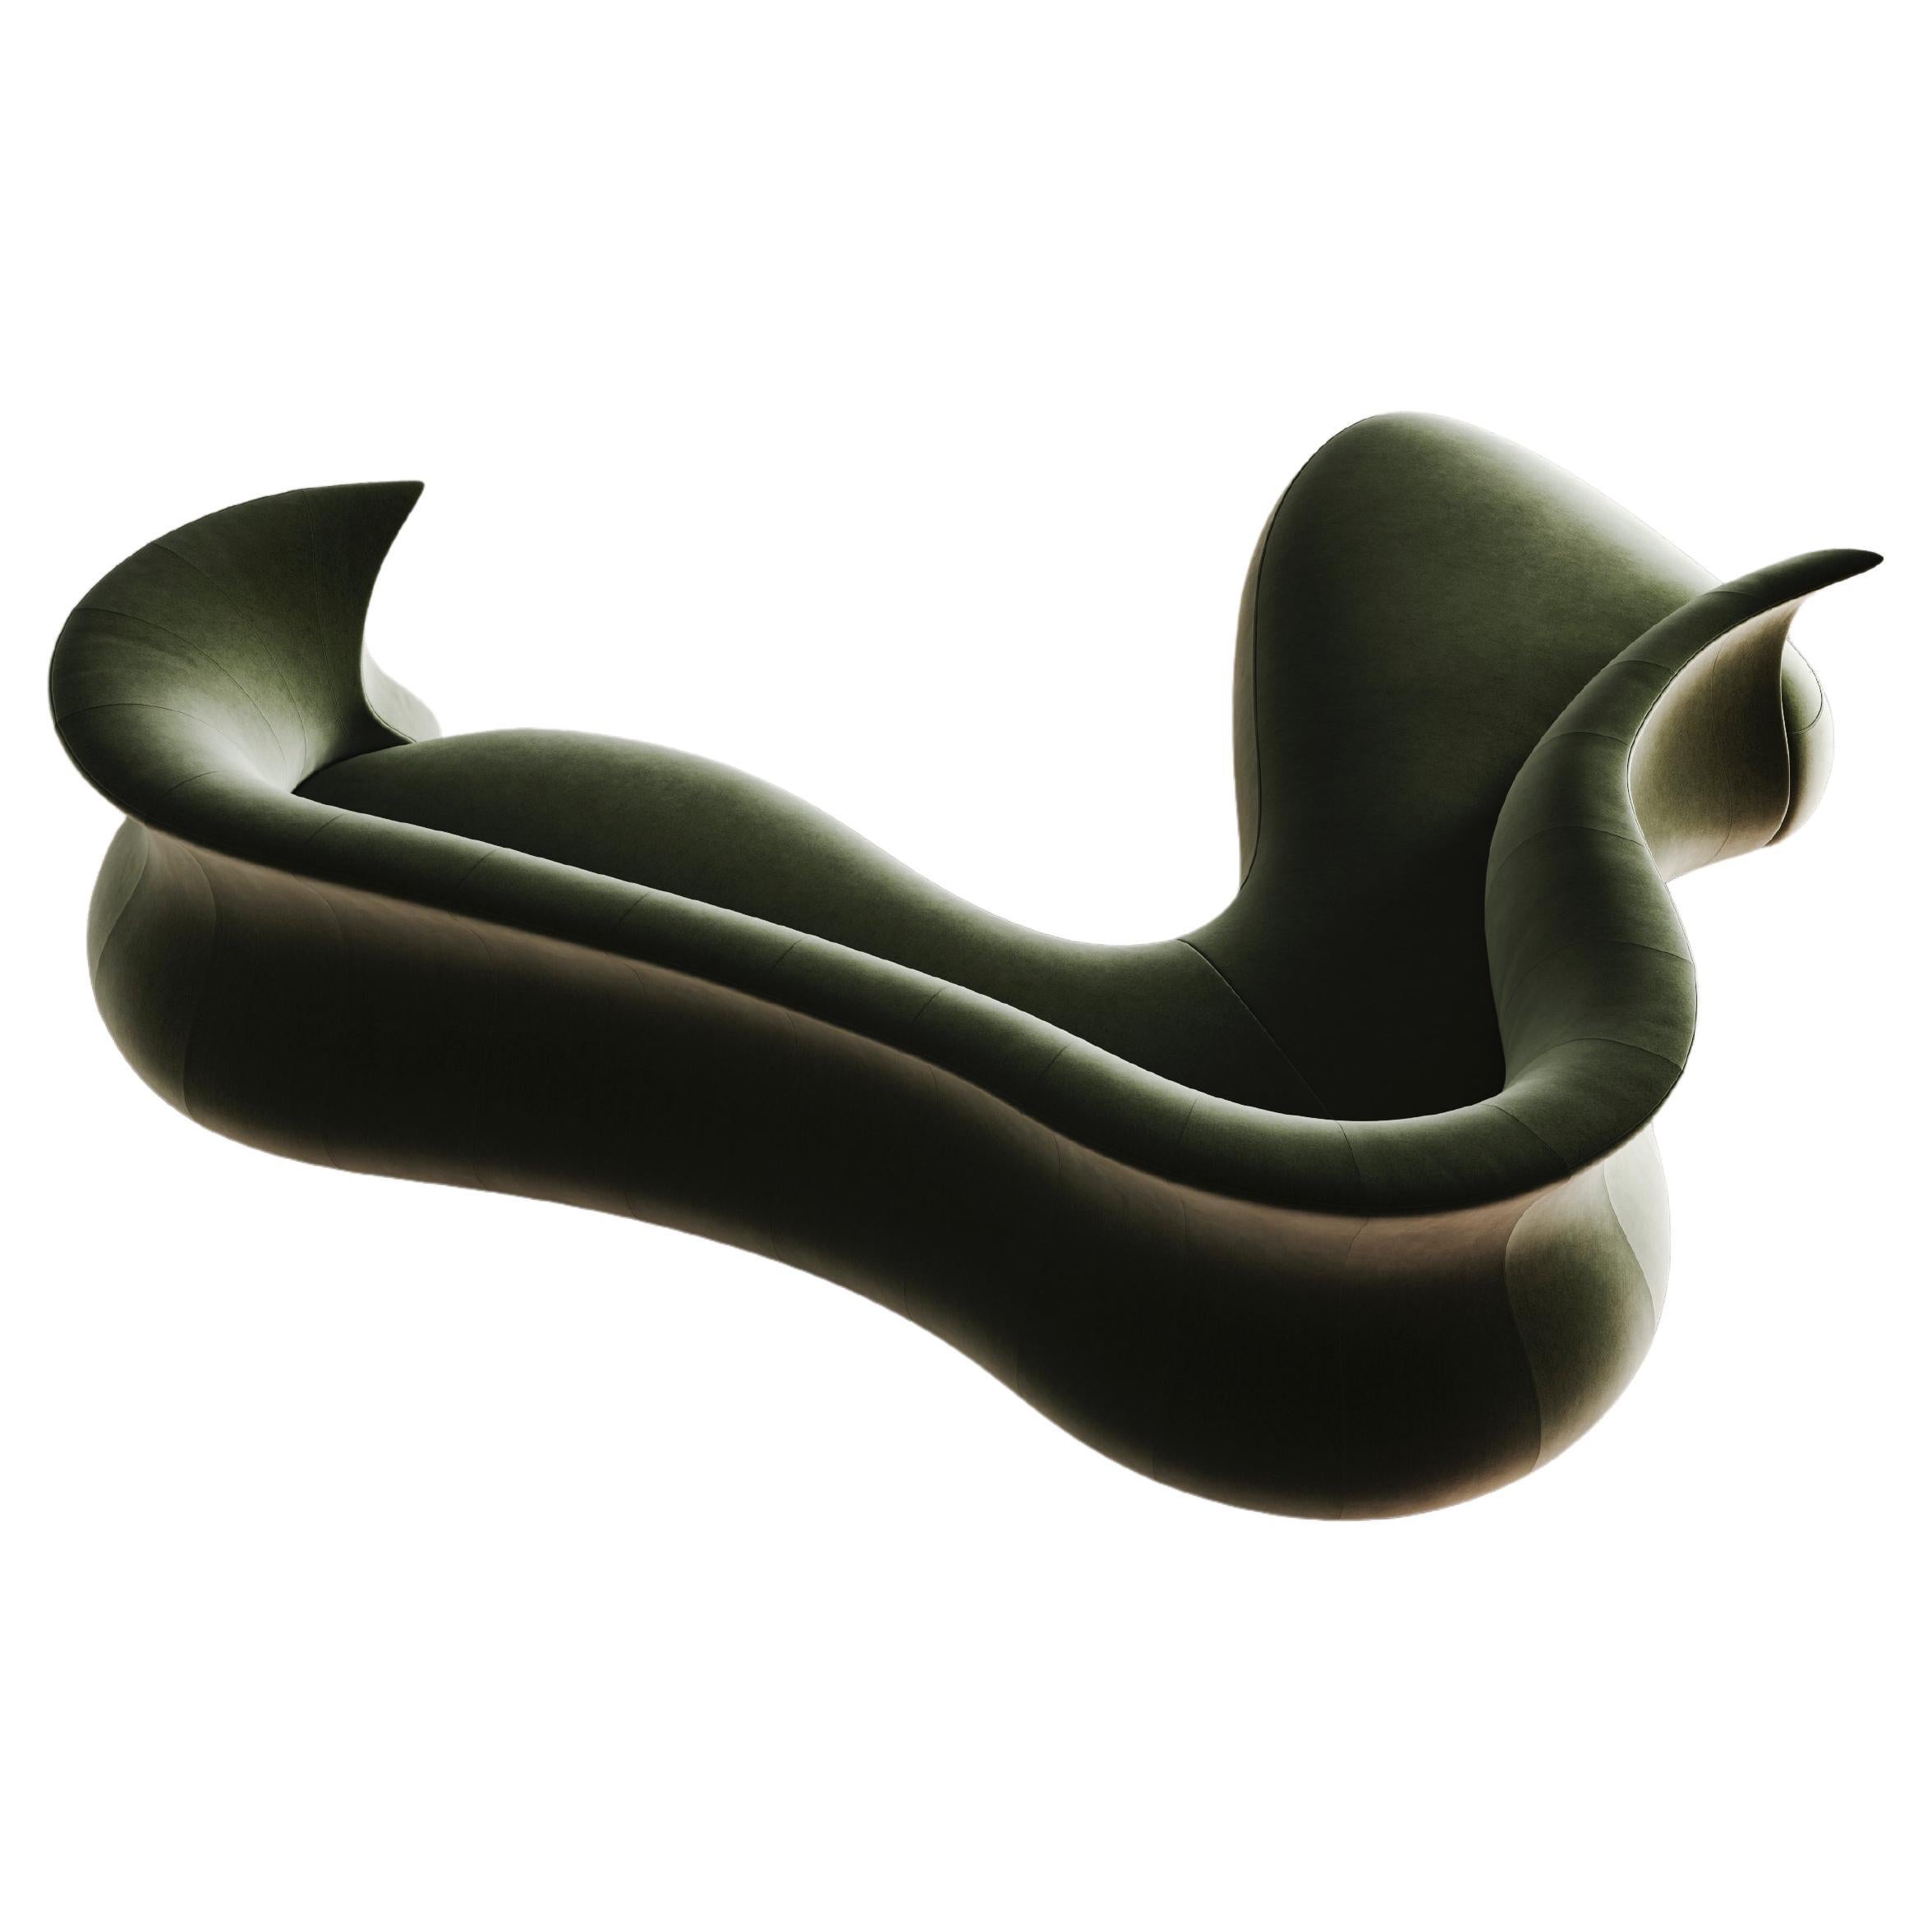 Modernist Contemporary Sculptural Handmade Curved Amphora Corner Sofa